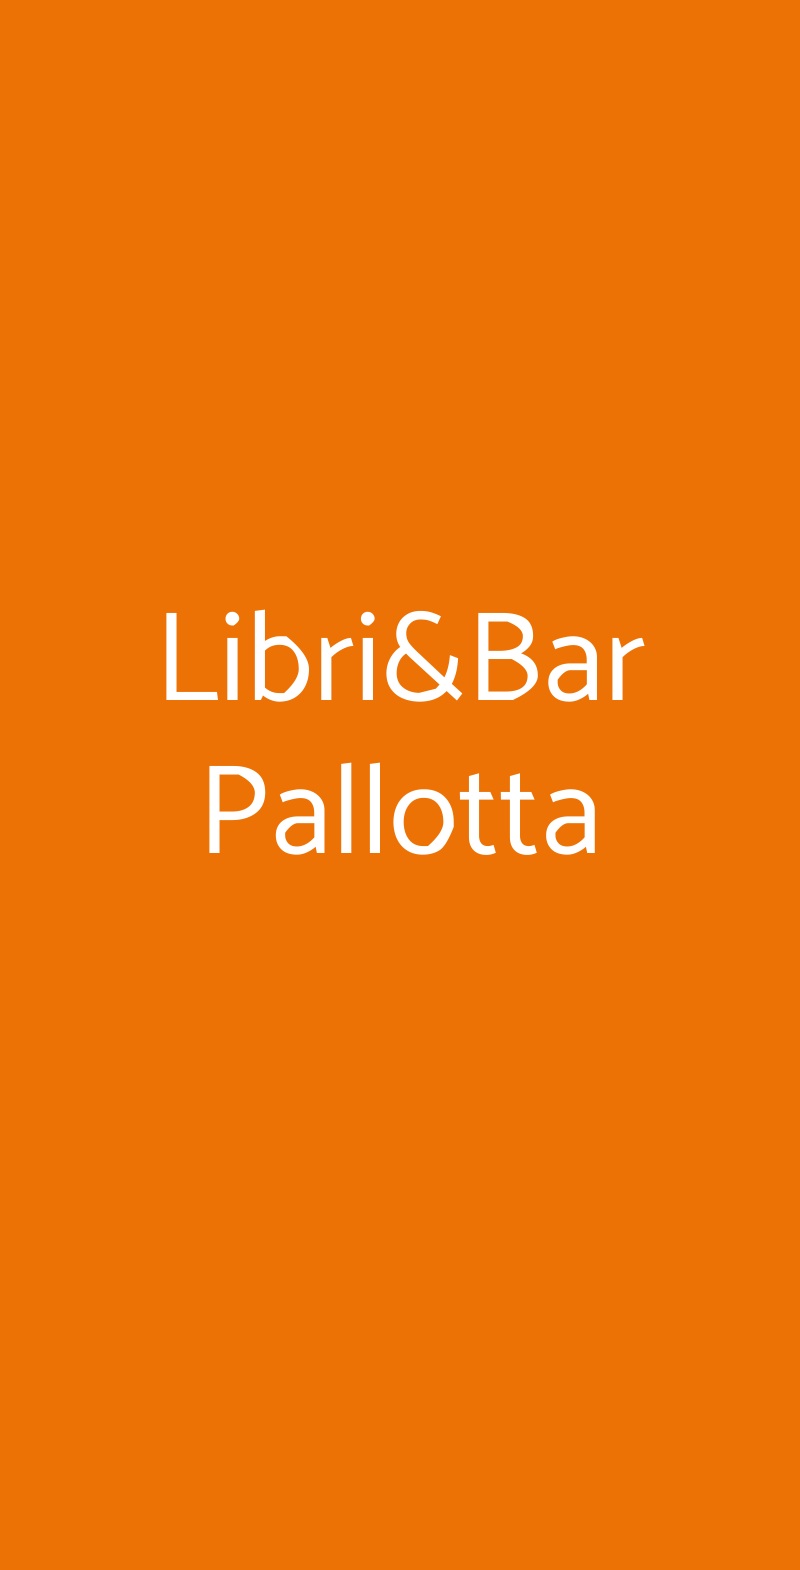 Libri&Bar Pallotta Roma menù 1 pagina